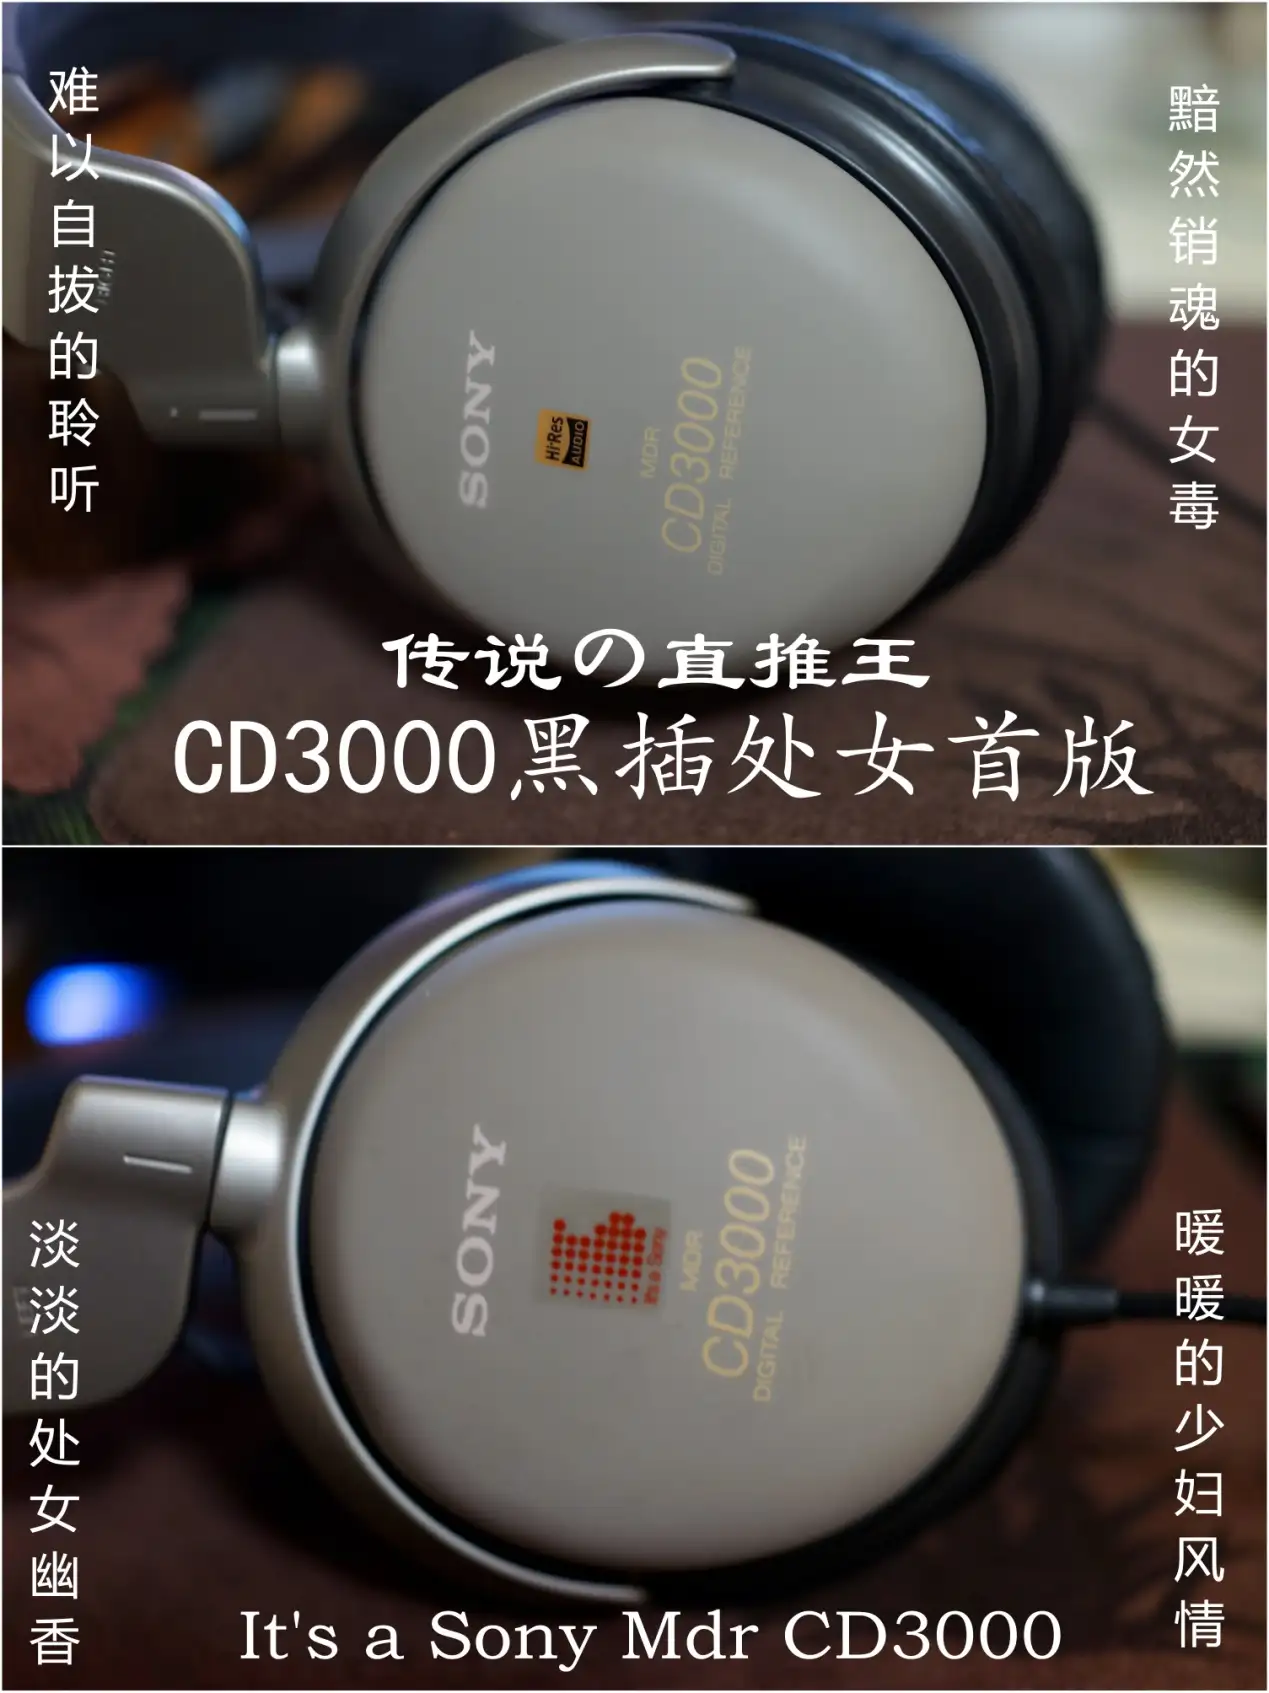 Sony Mdr Cd3000 完全手册1 - 知乎